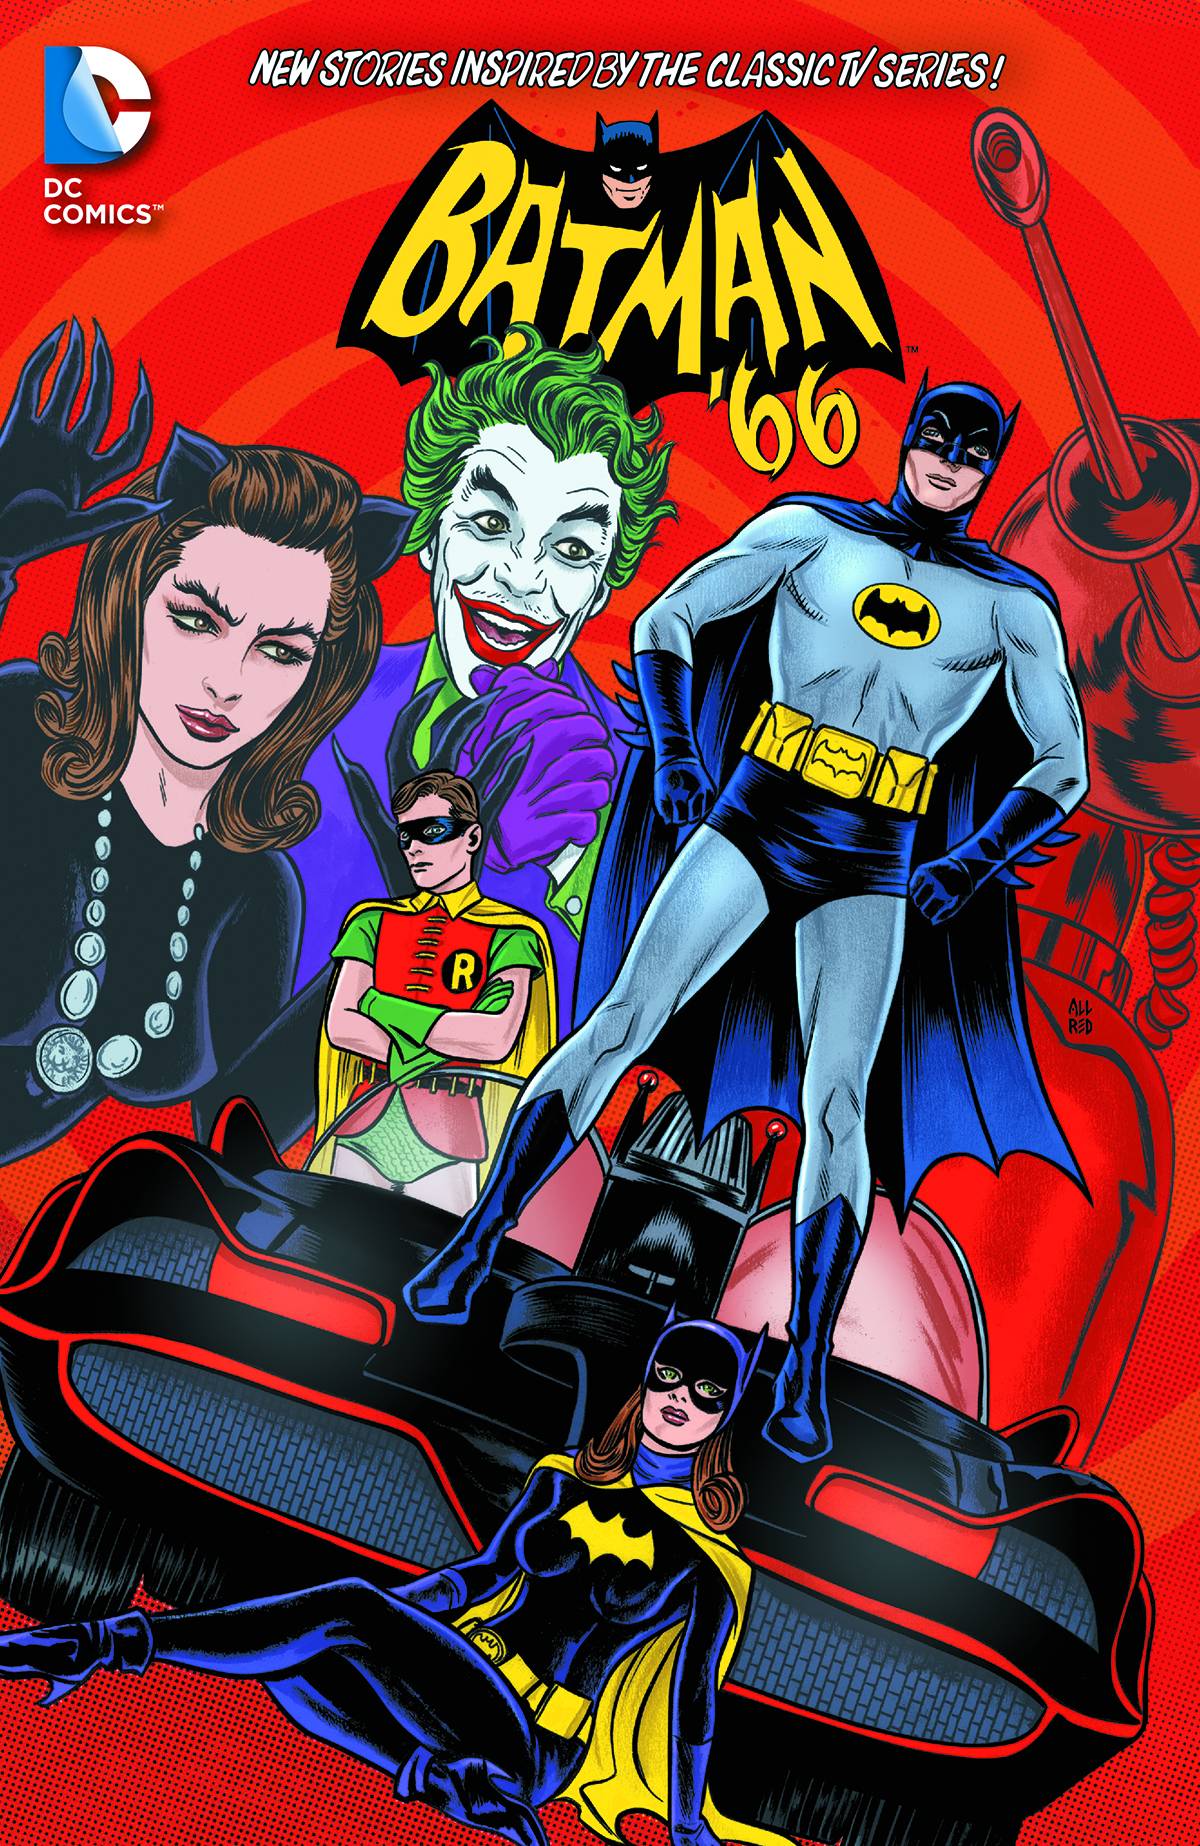 Batman 66 Hardcover Volume 3